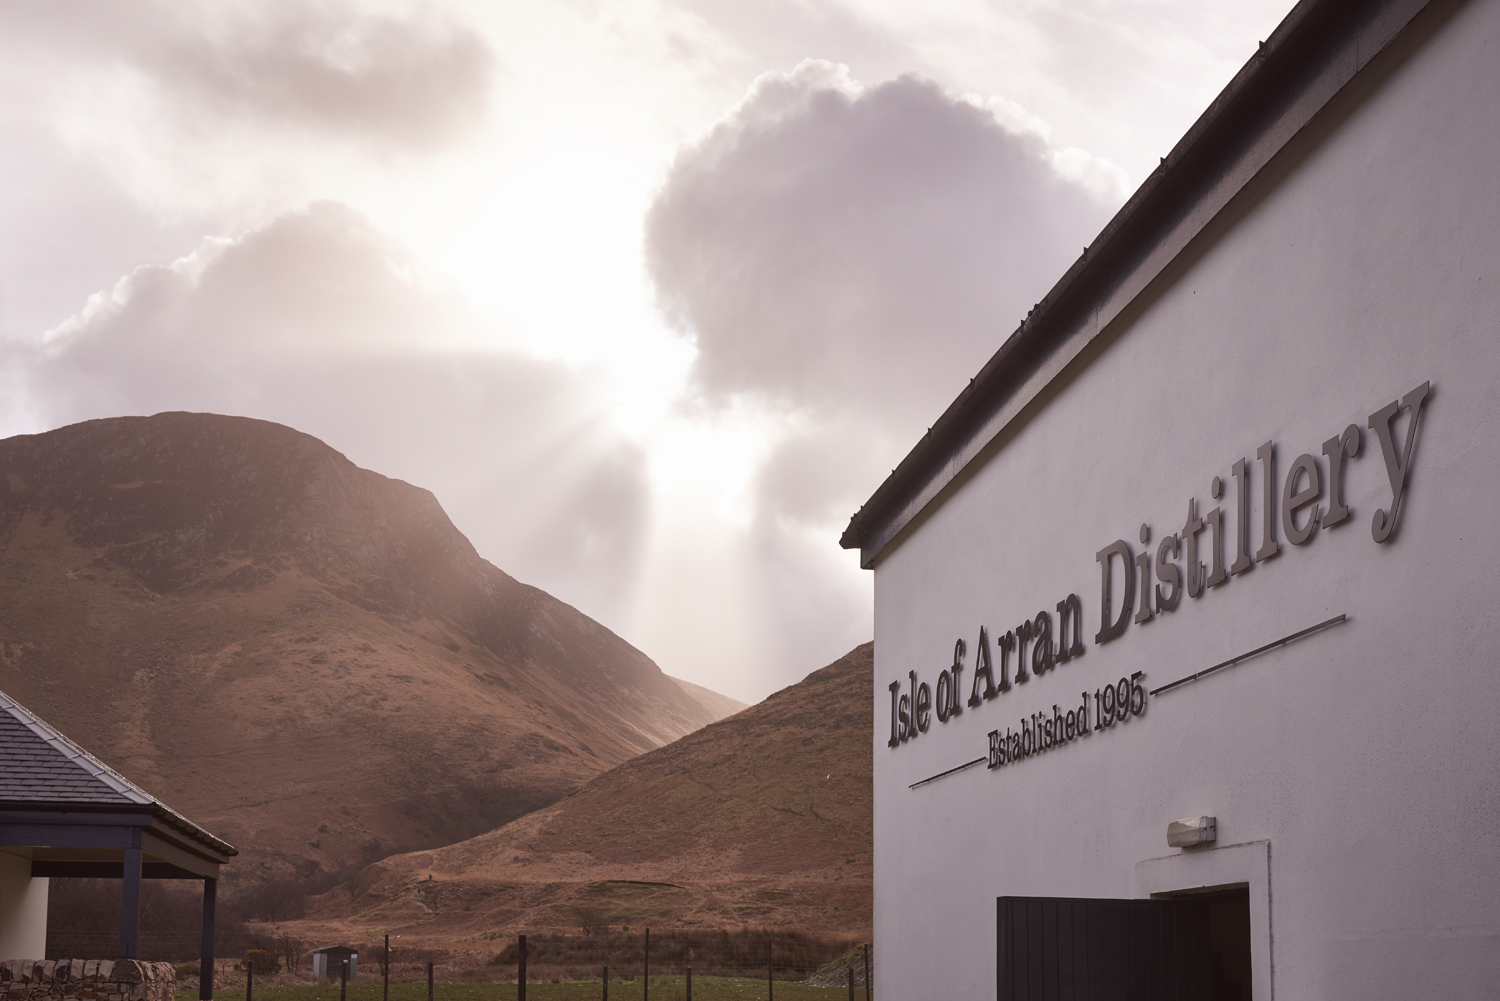 Isle of Arran Distillery